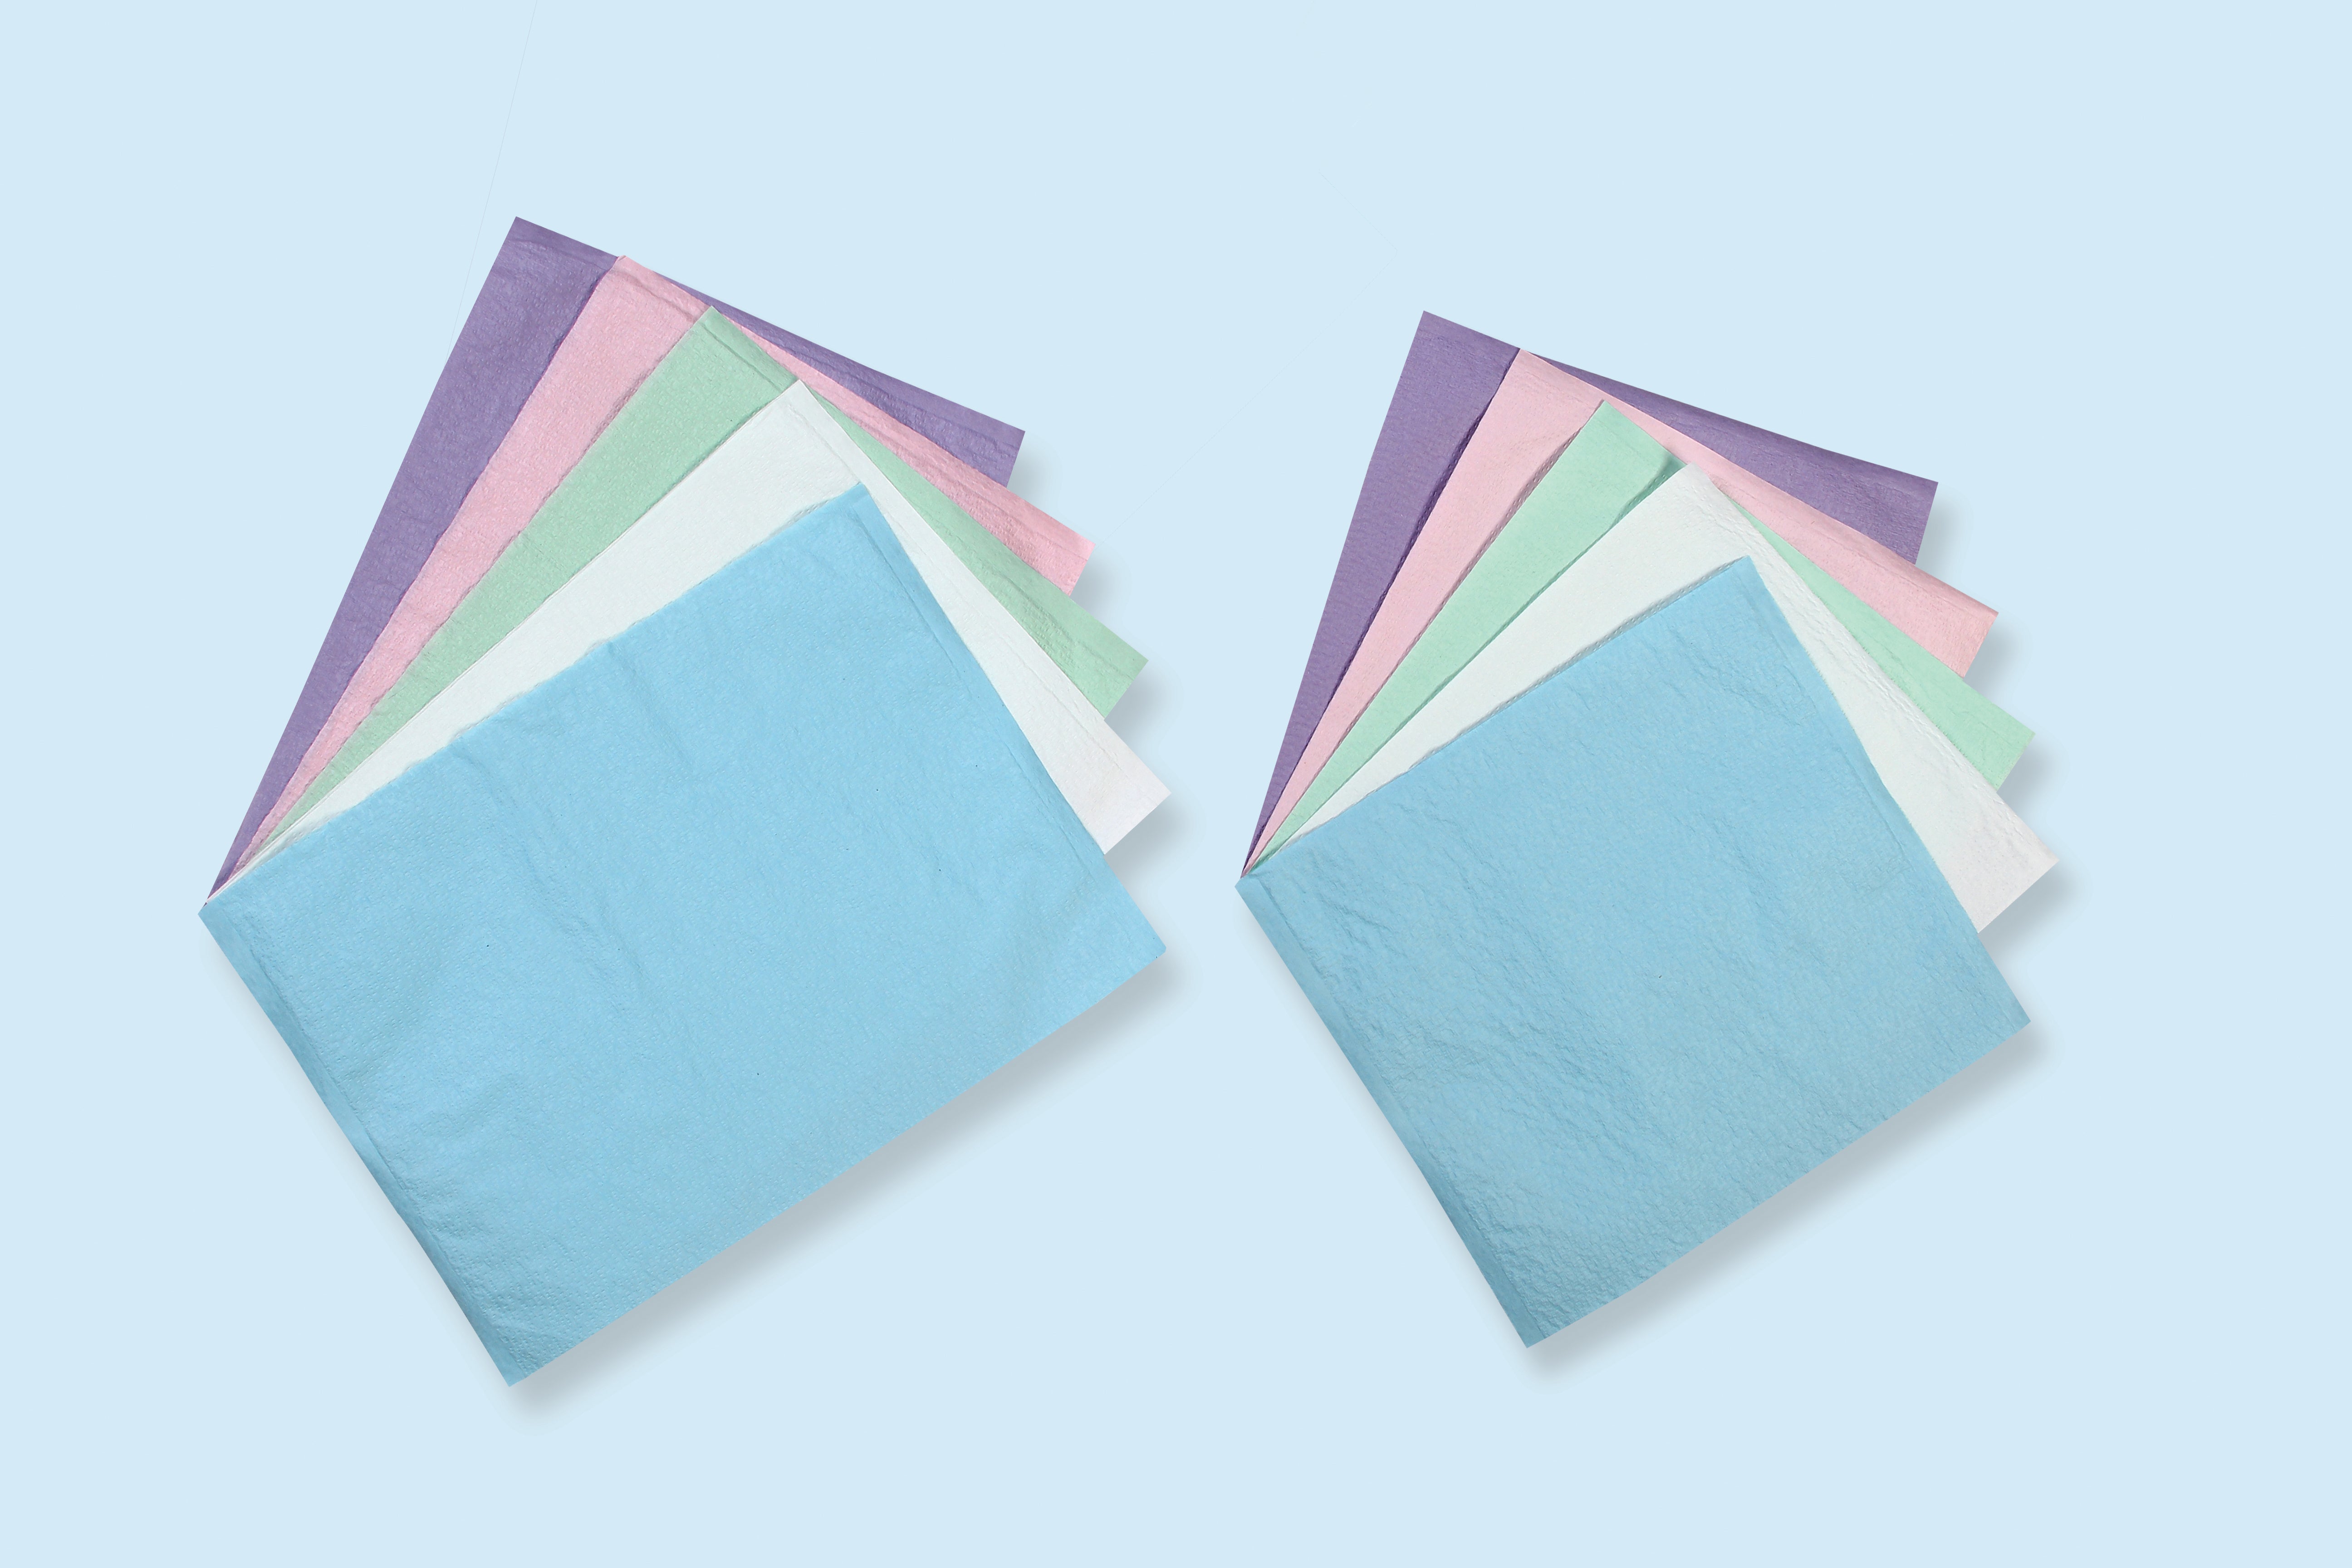 Plasdent Tissue/Poly Headrest Covers